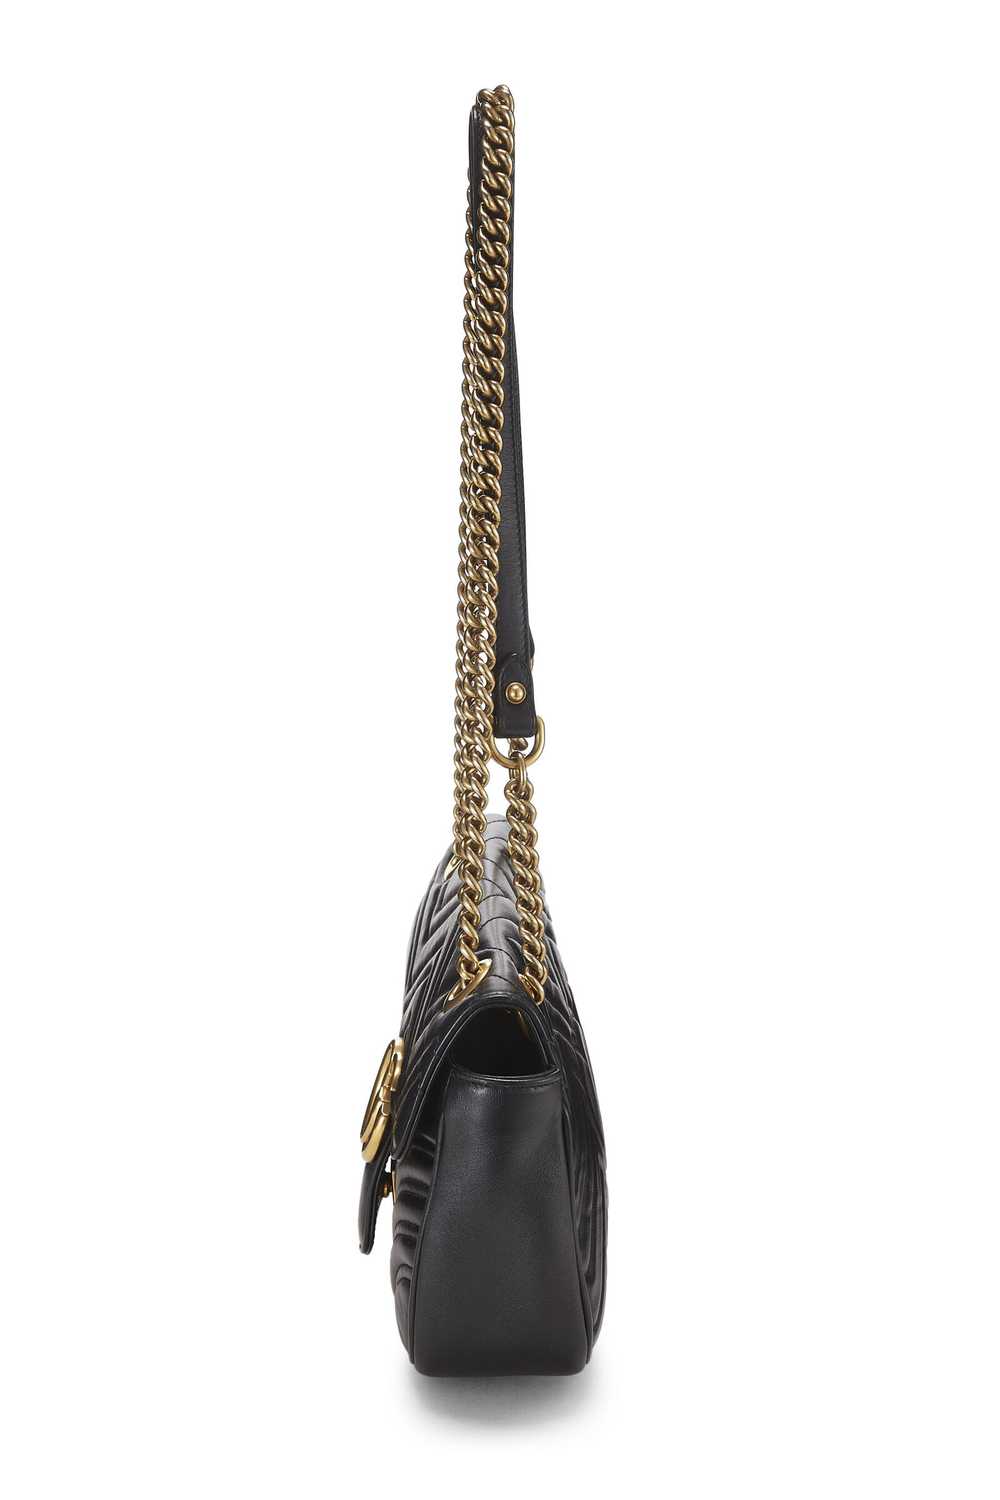 Black Leather GG Marmont Shoulder Bag Small - image 3